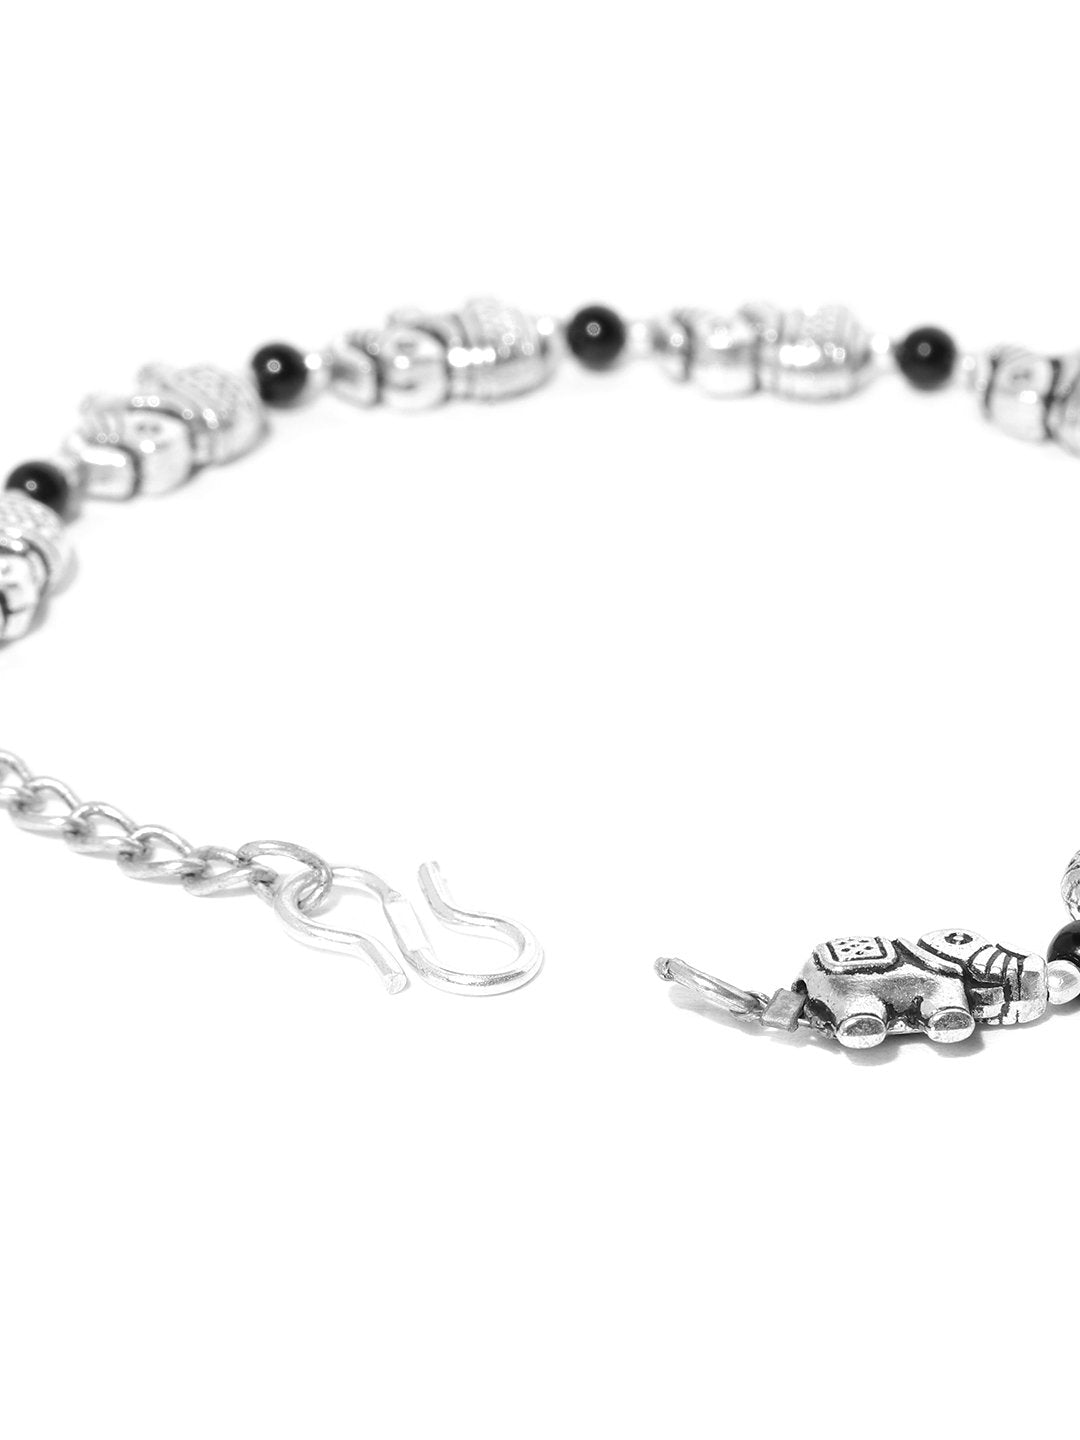 Antique Oxidised Silver-Toned Elephant Inspired Adjustable Chain Bracelet